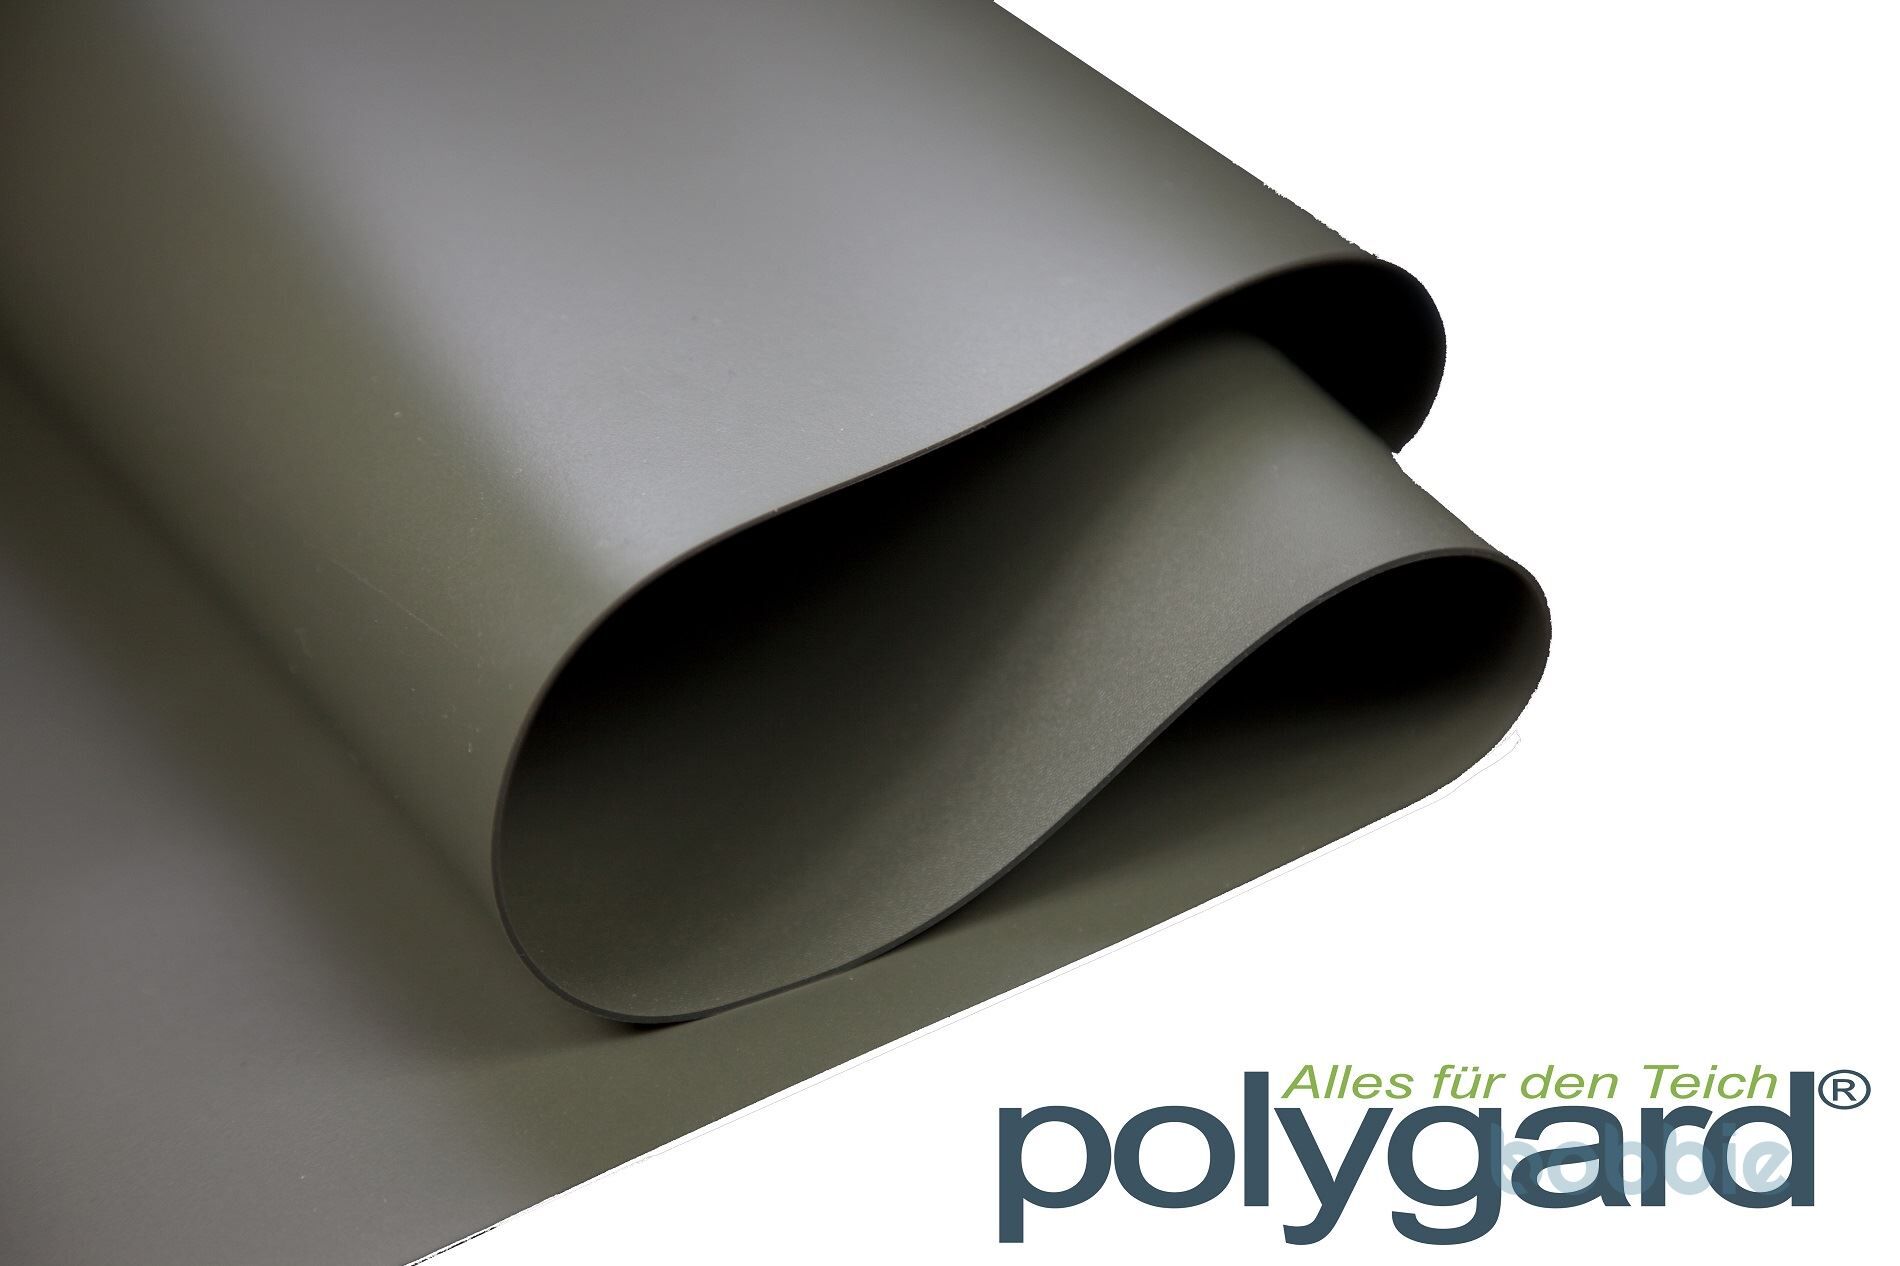 Polygard PVC Teichfolie 1,5mm oliv-grün PrePack - 6,0 x 3,0 m